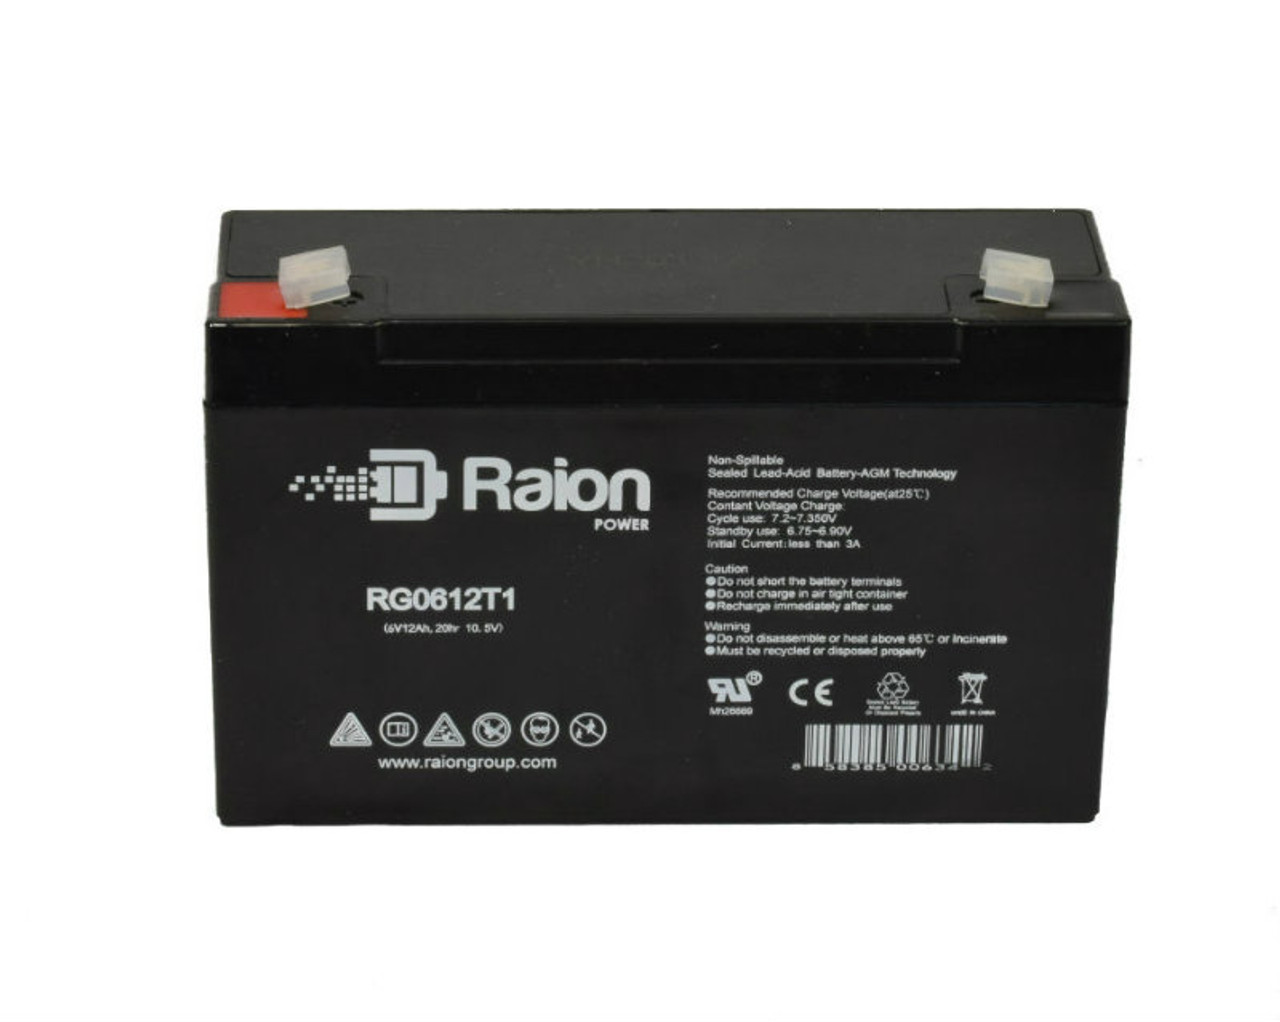 Raion Power RG06120T1 SLA Battery for Baxter Healthcare 2M8015 Pump